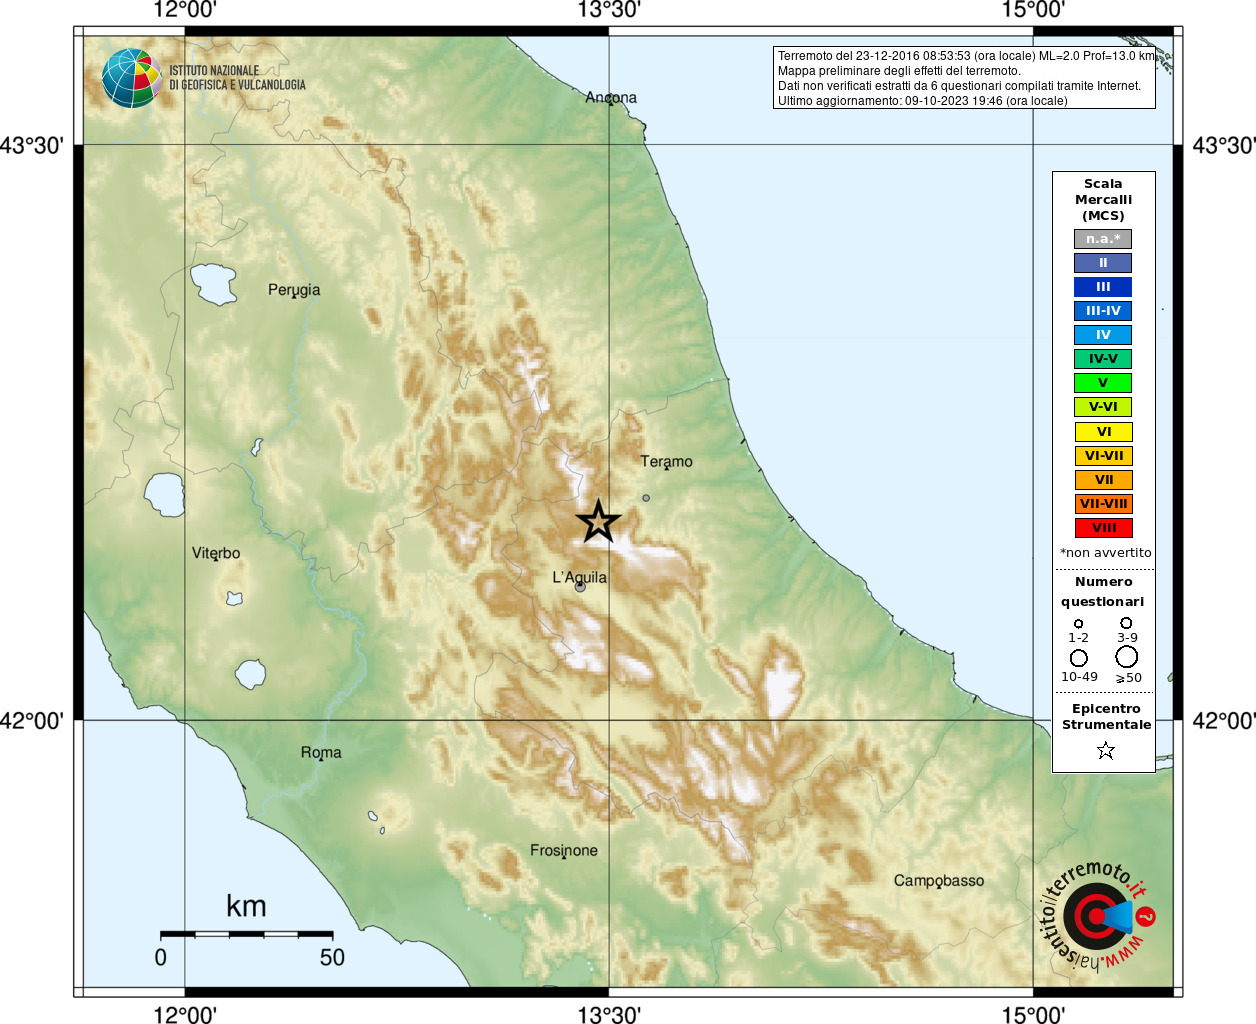 Earthquake 4 km SW Crognaleto (TE), Magnitude ML 2.0, 23 December 2016 time 08:53:53 ...